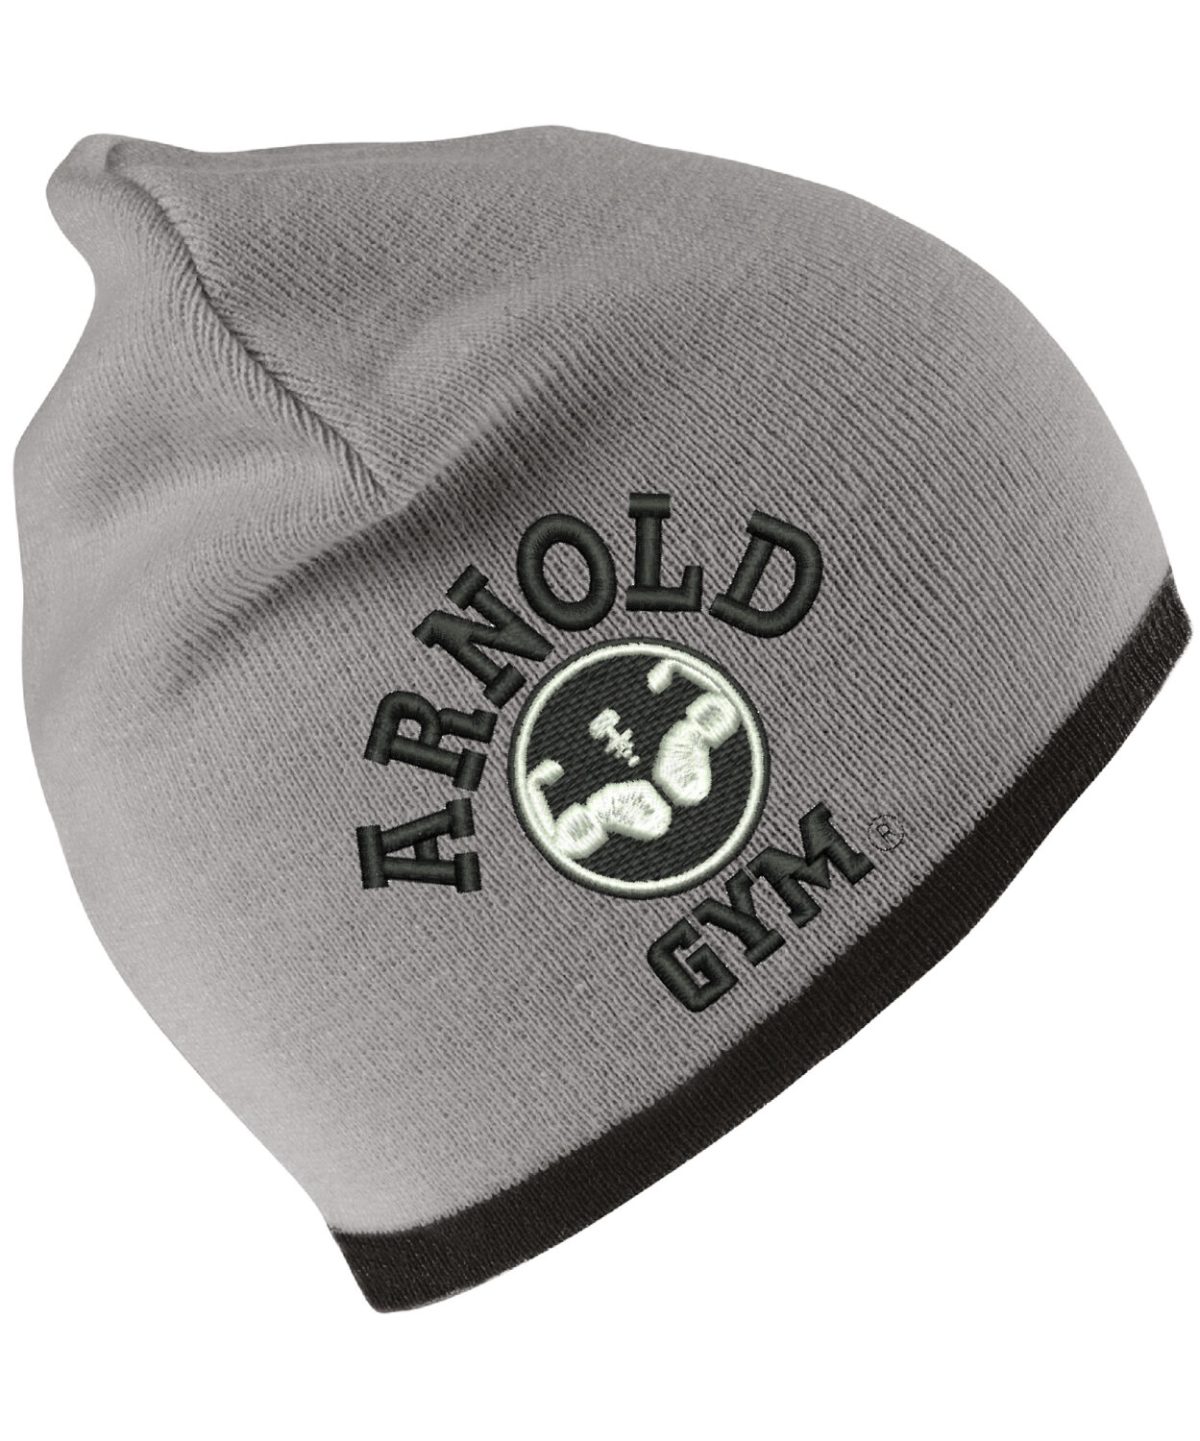 arnold gym beanie hat black embroidery grey cap